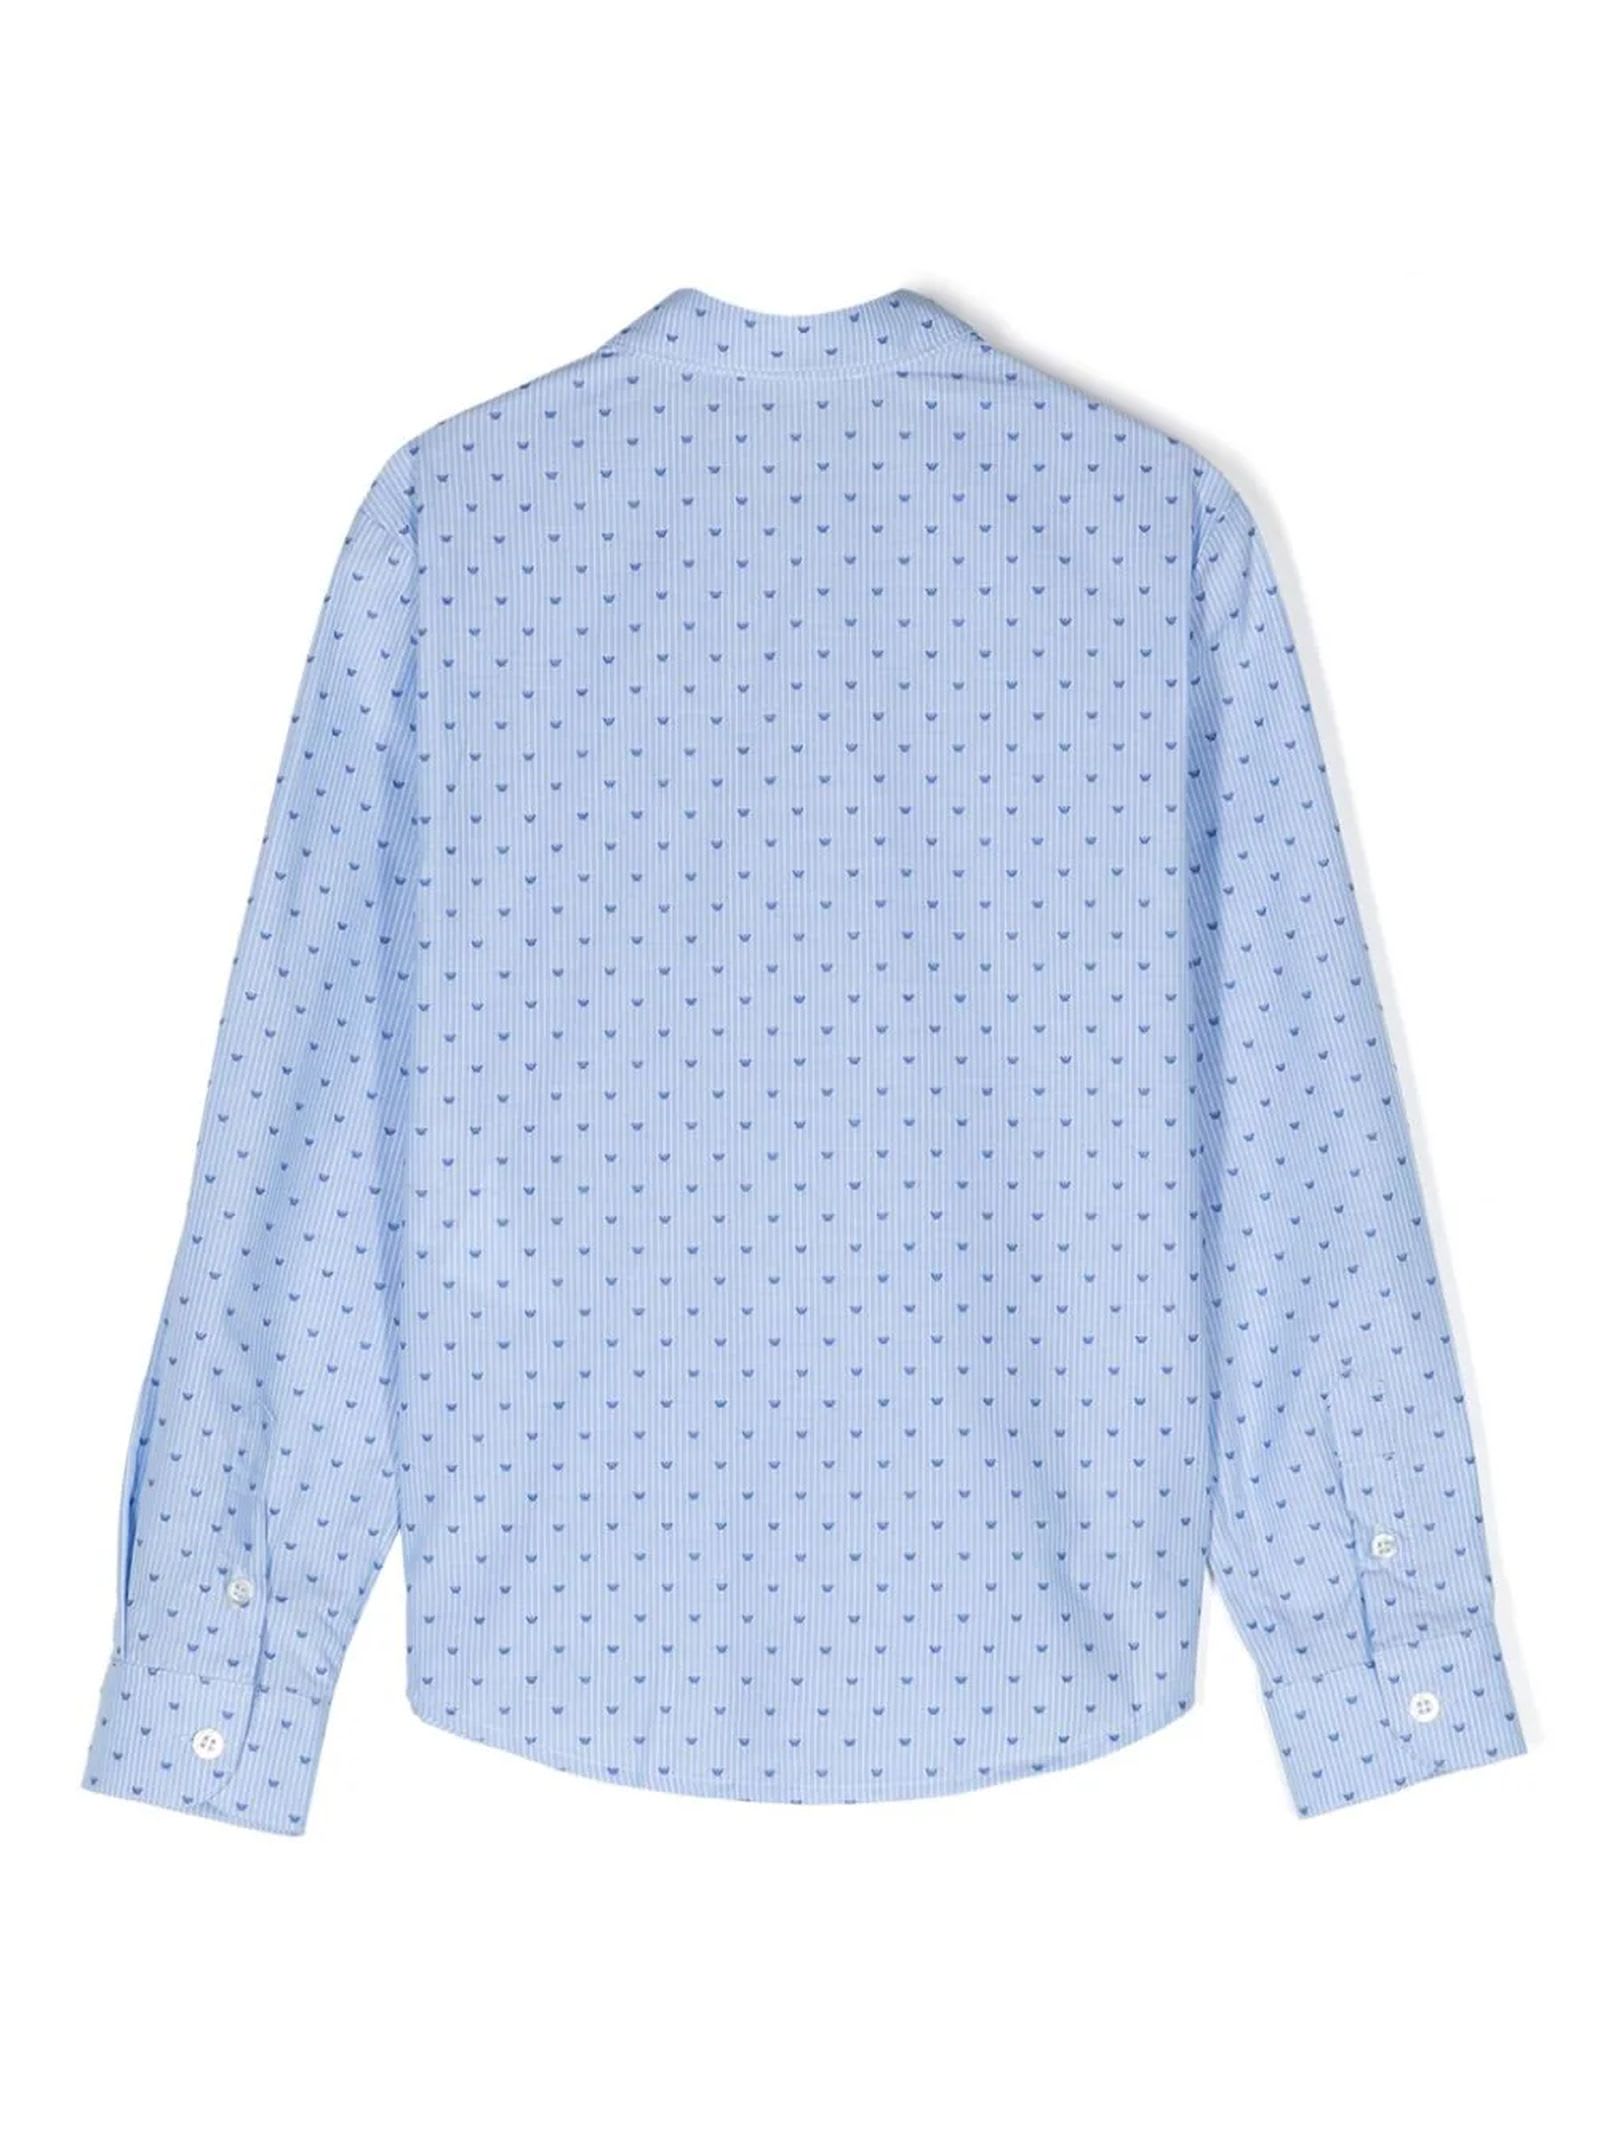 Shop Emporio Armani Shirts Clear Blue